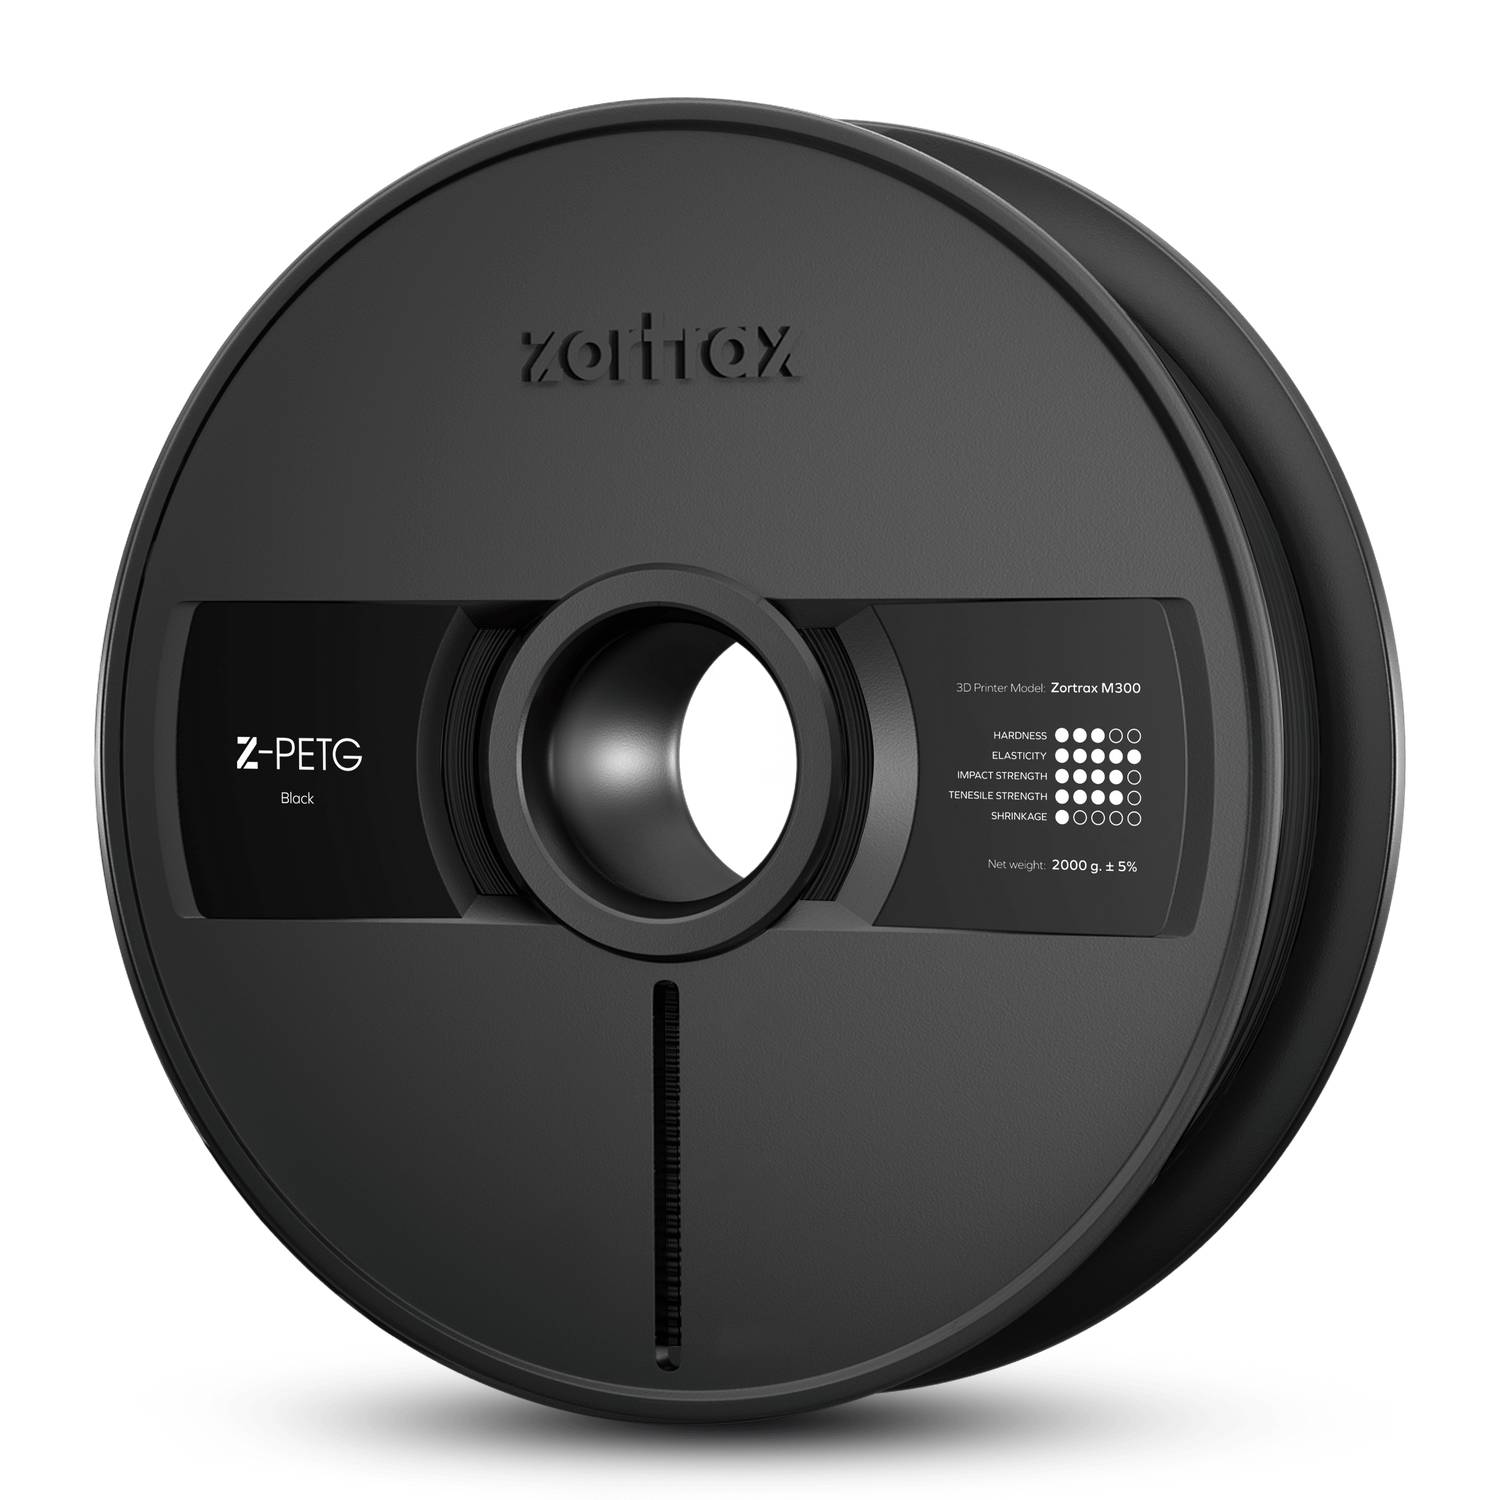 Zortrax Z-PETG Filament - 800g